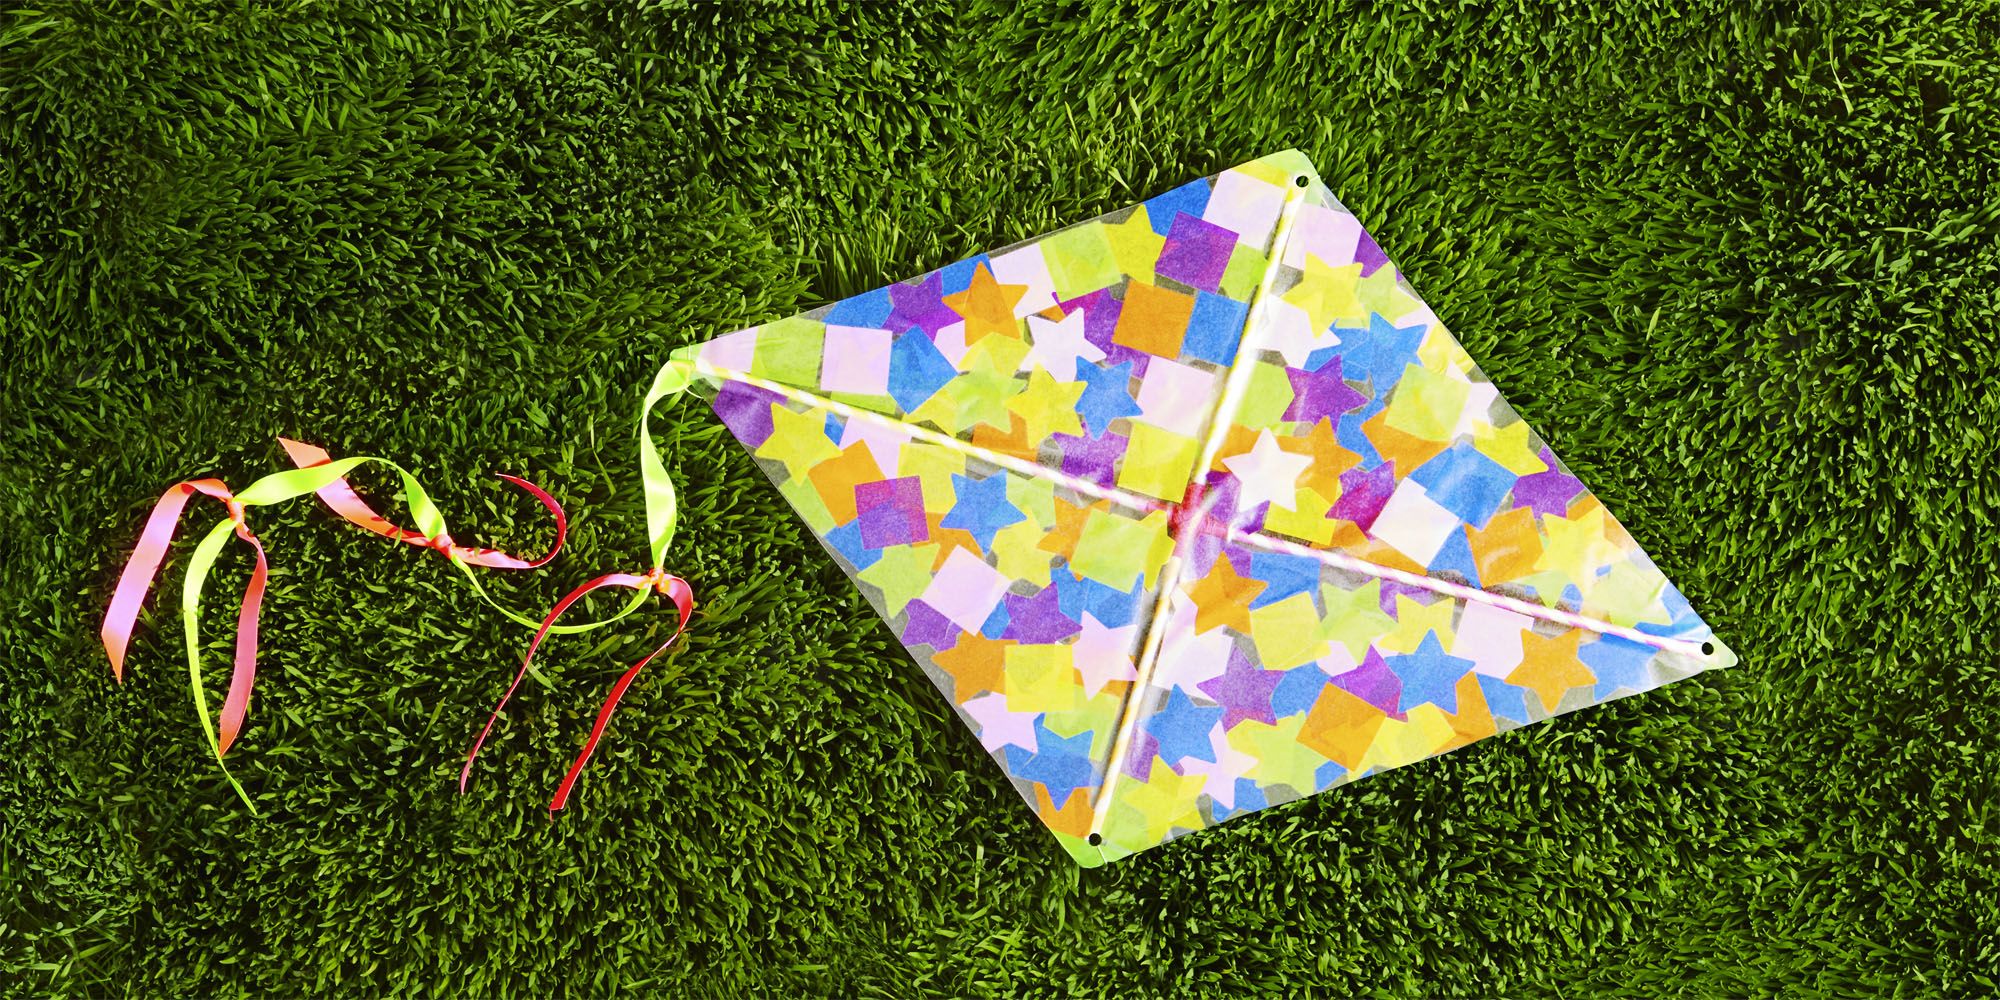 Beautiful kite theme Decoration ideas, kite making Competition & crafts -  YouTube